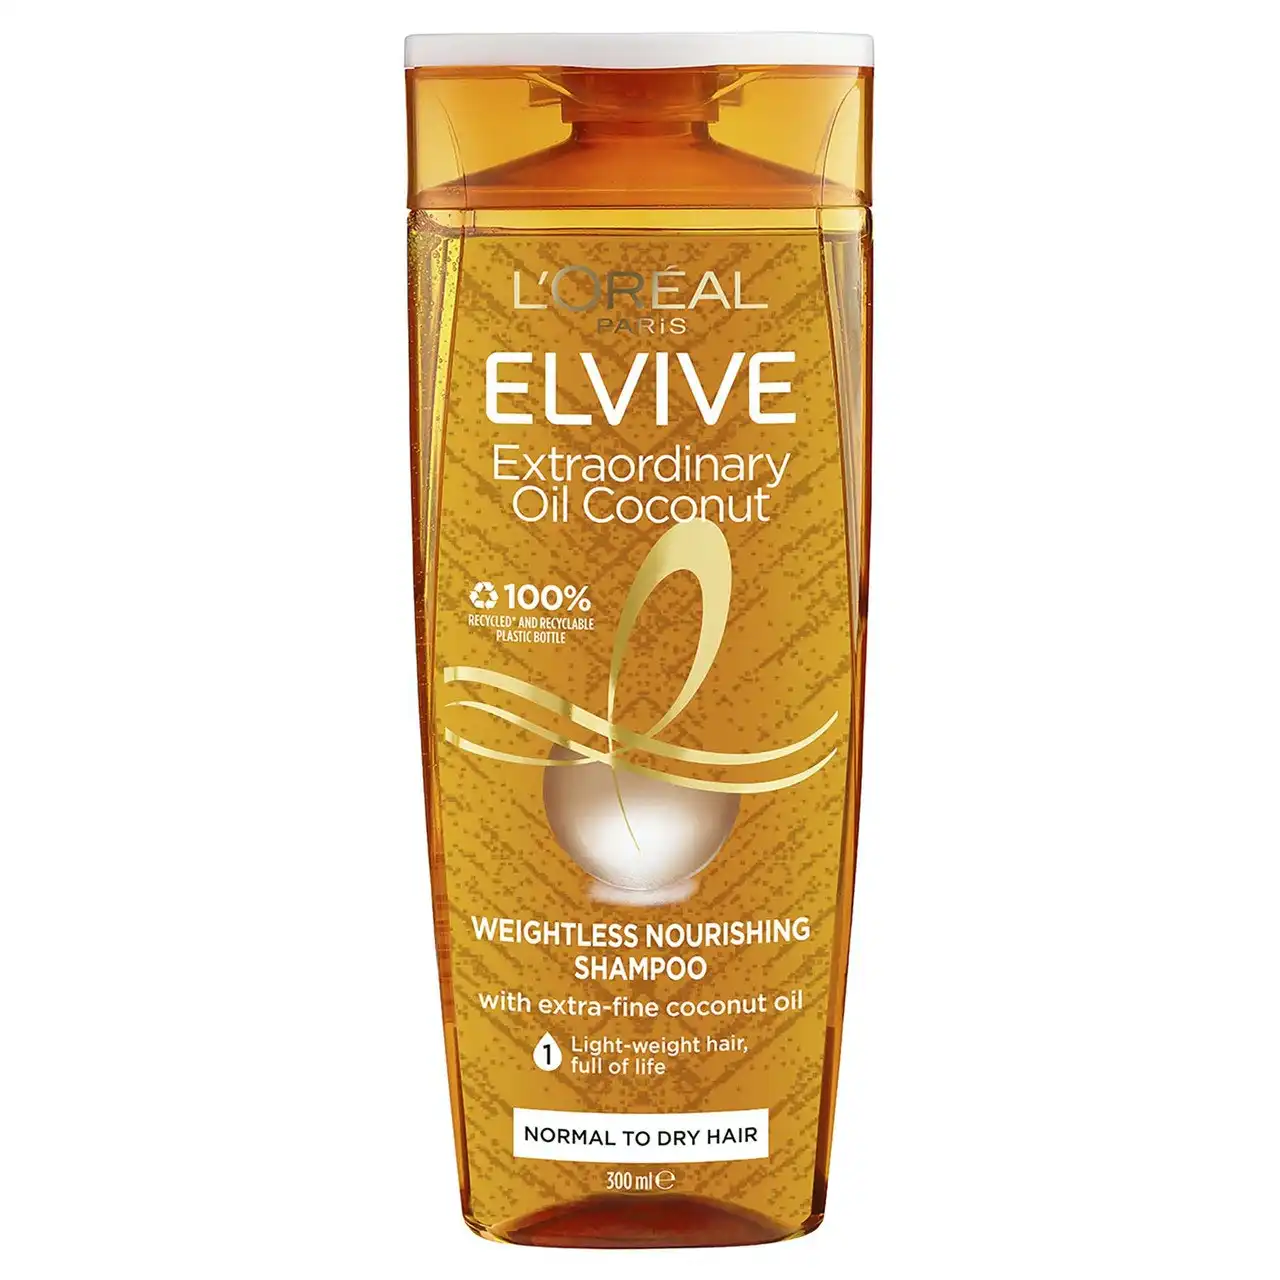 Elvive Extraordinary Oils Coconut Shampoo 300mL